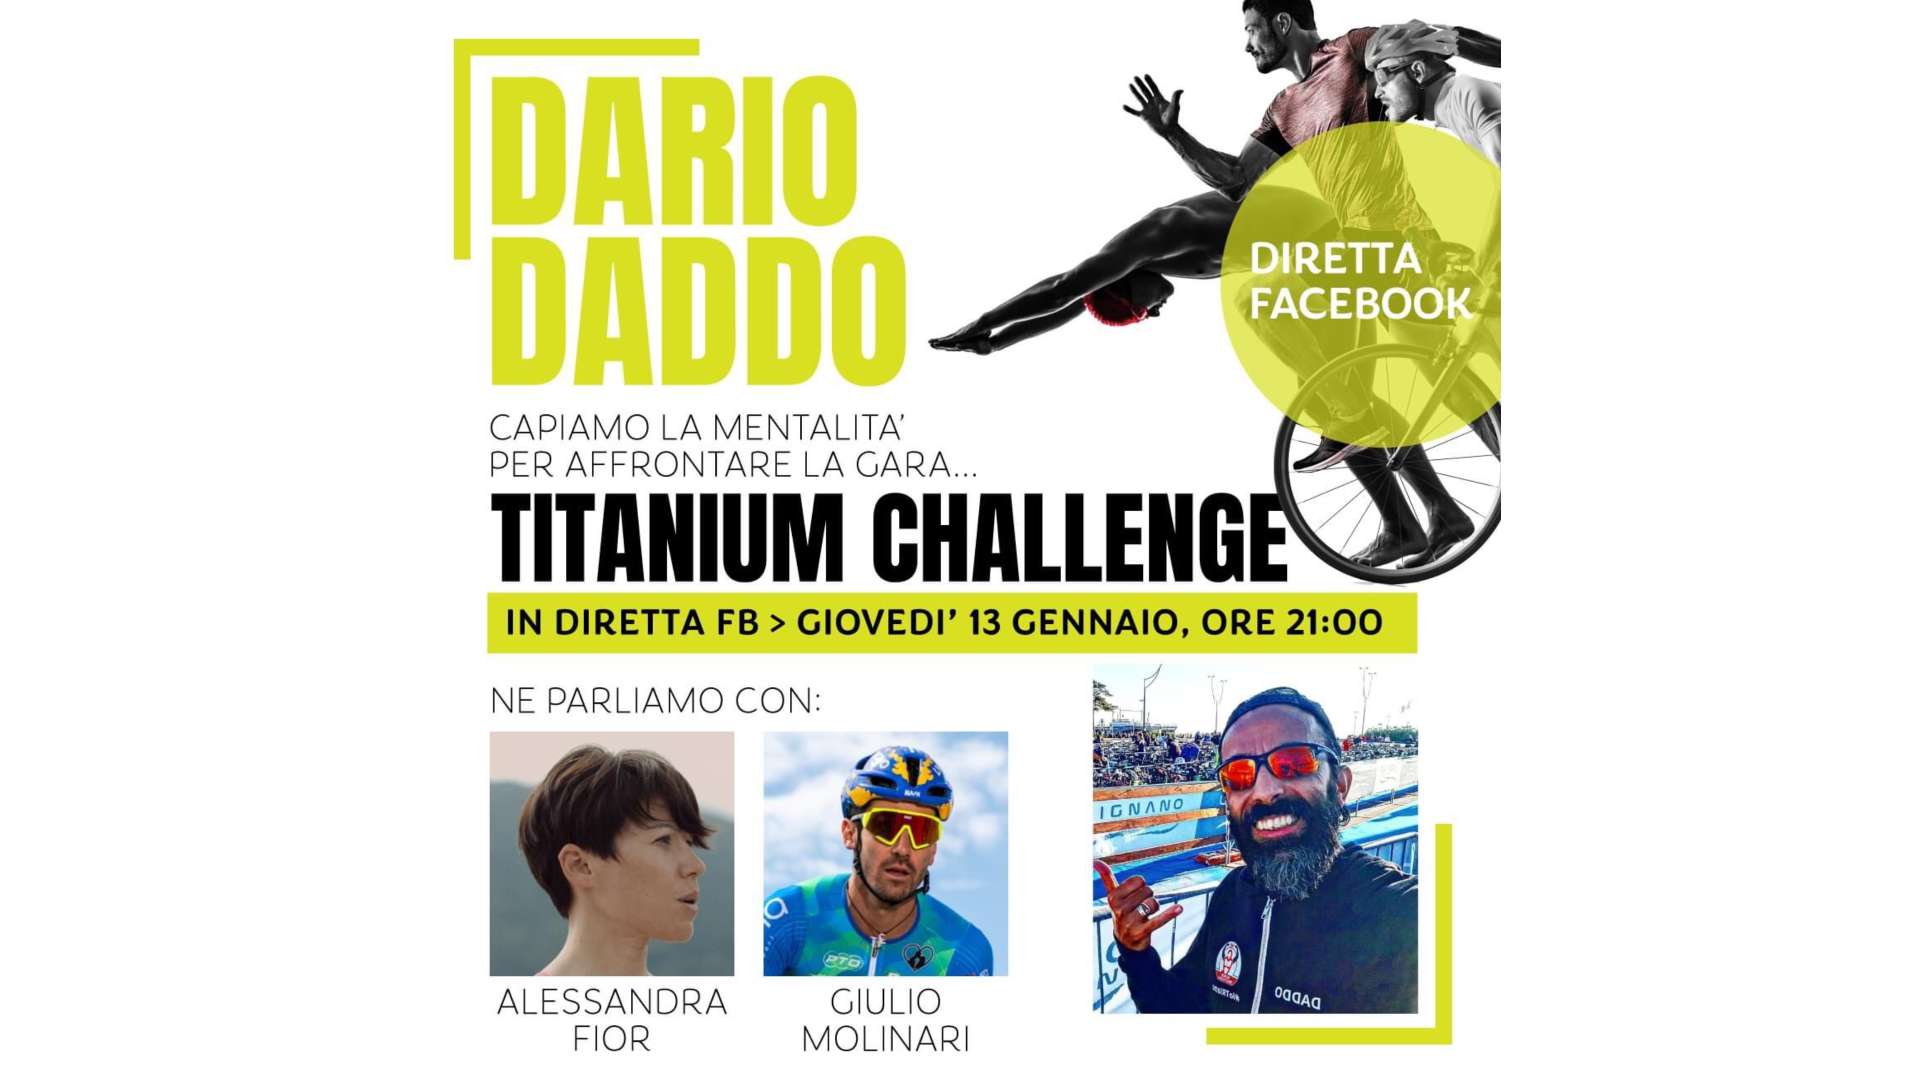 Titanium Live 1 diretta 13 gennaio 2022 Giulio Molinari Alessandra Fior Dario Daddo Nardone